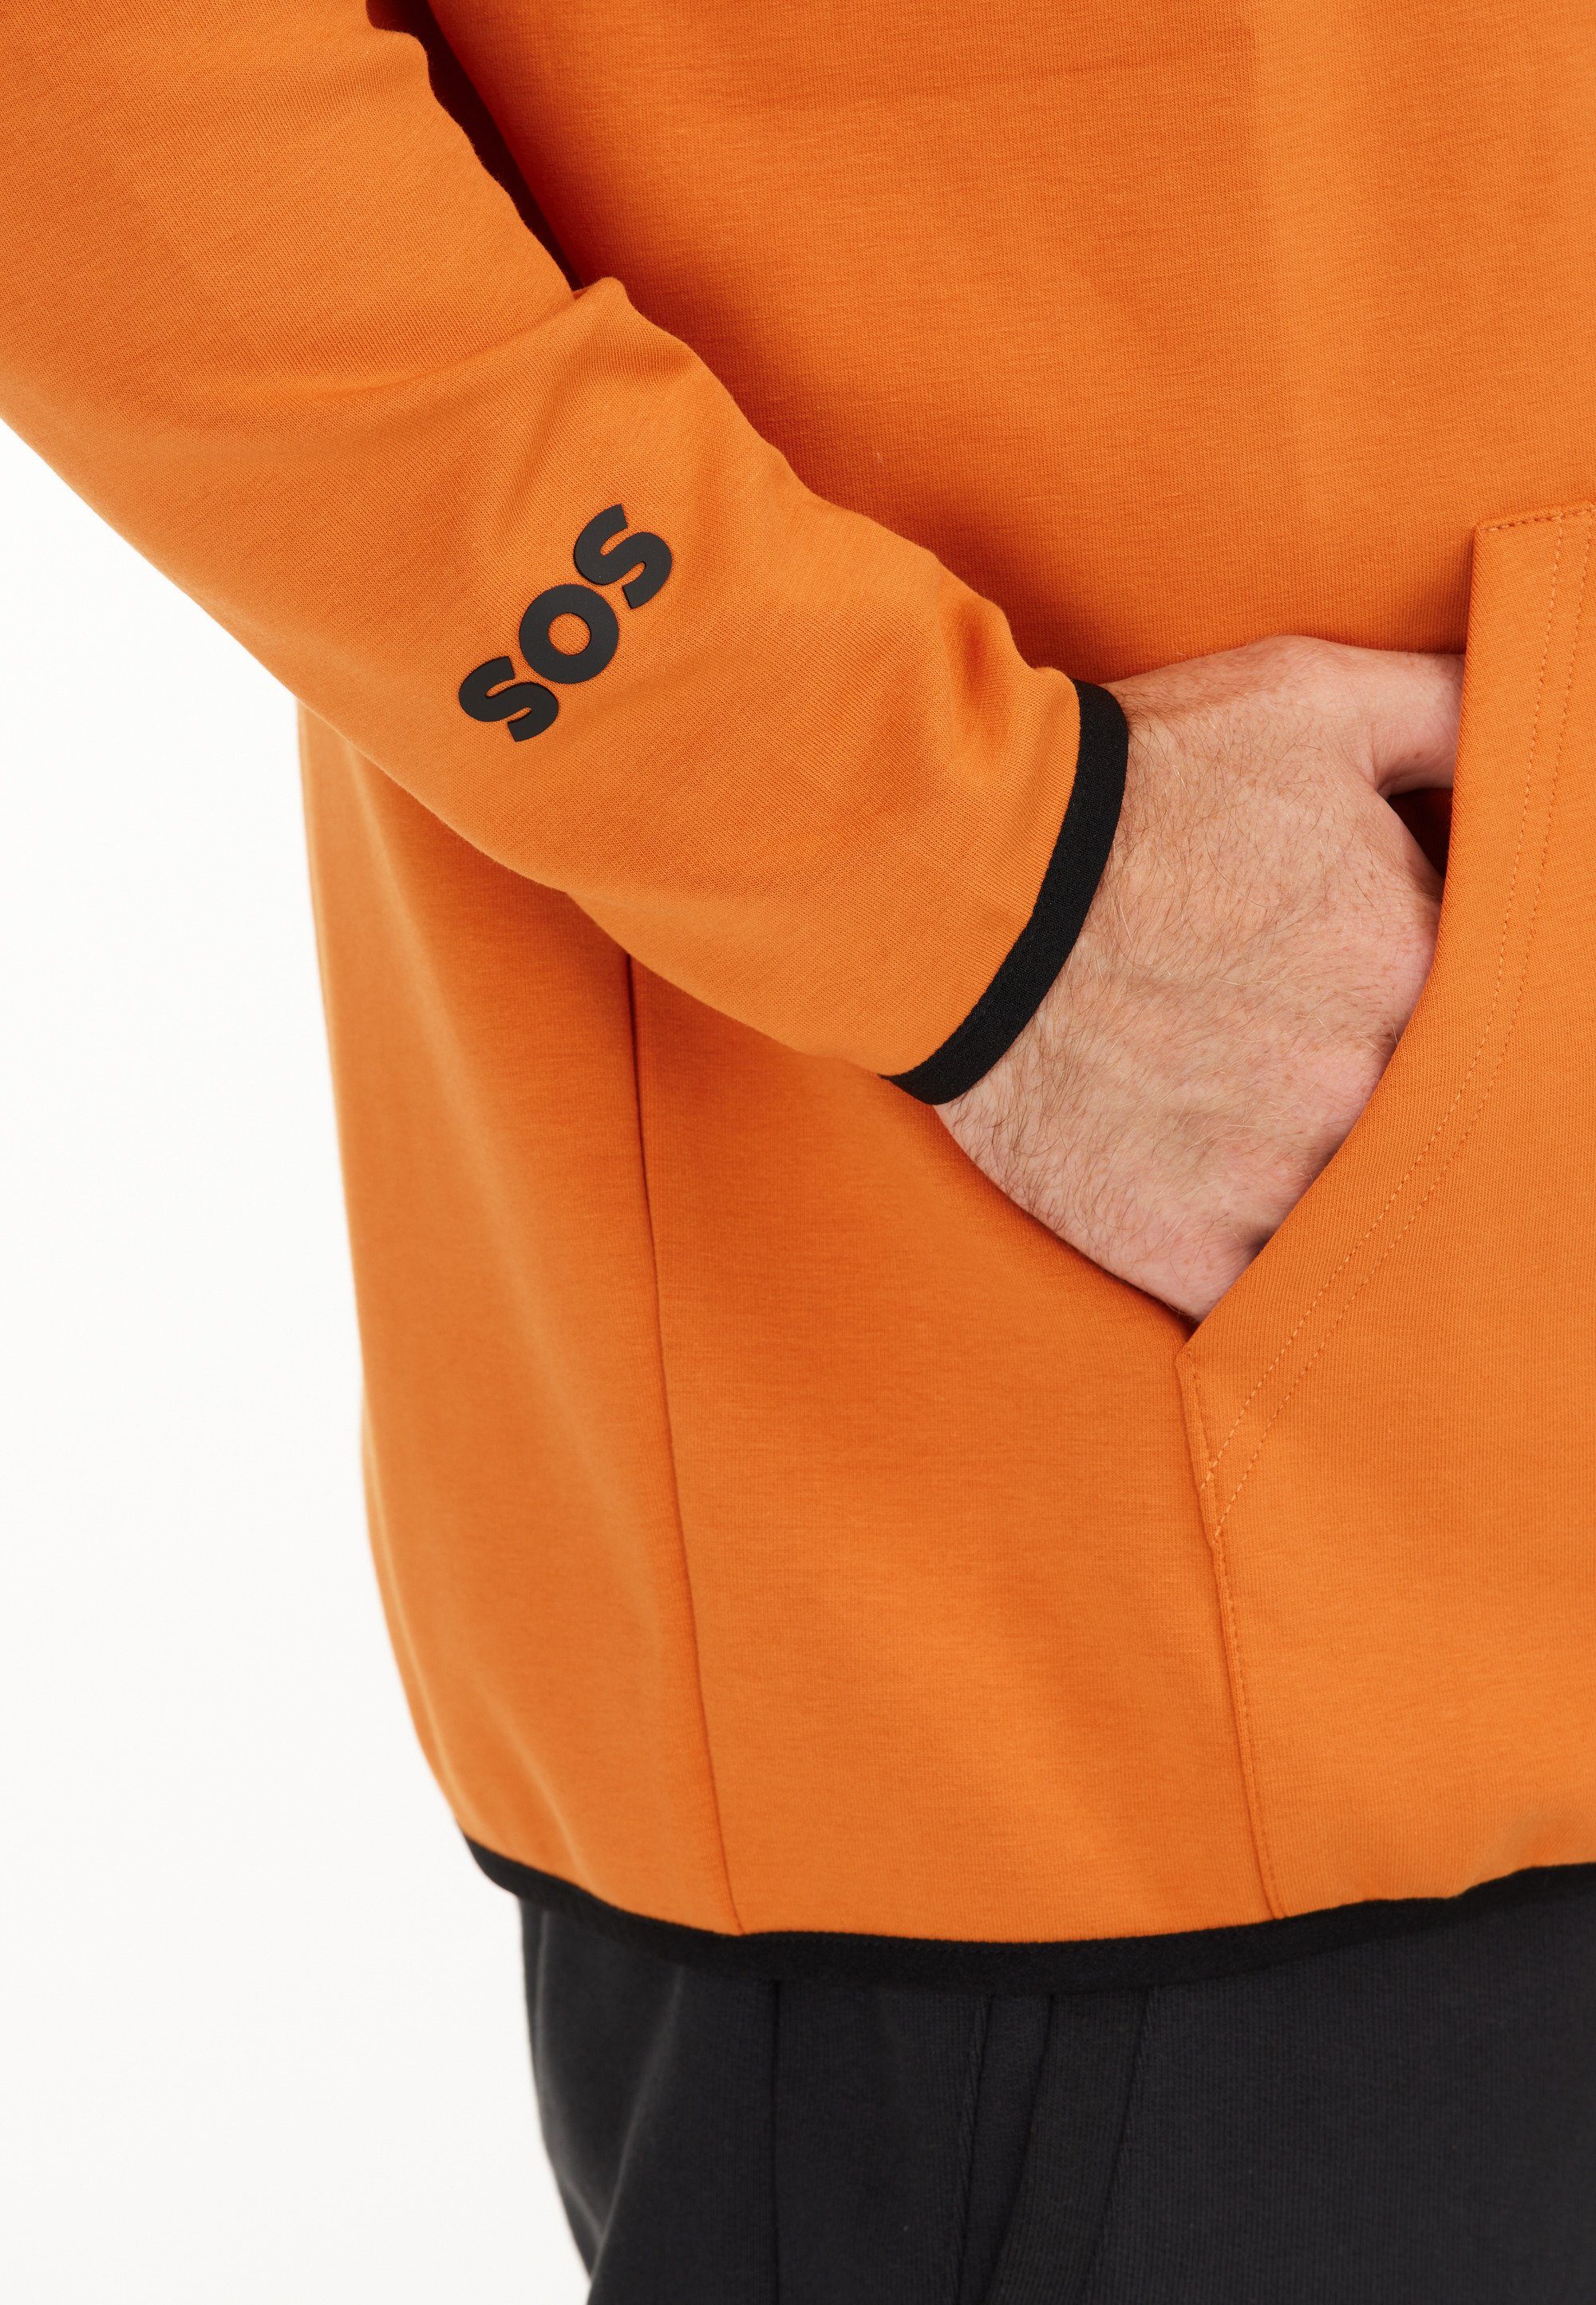 wärmender mit orange Vail Kapuze Kapuzensweatshirt SOS